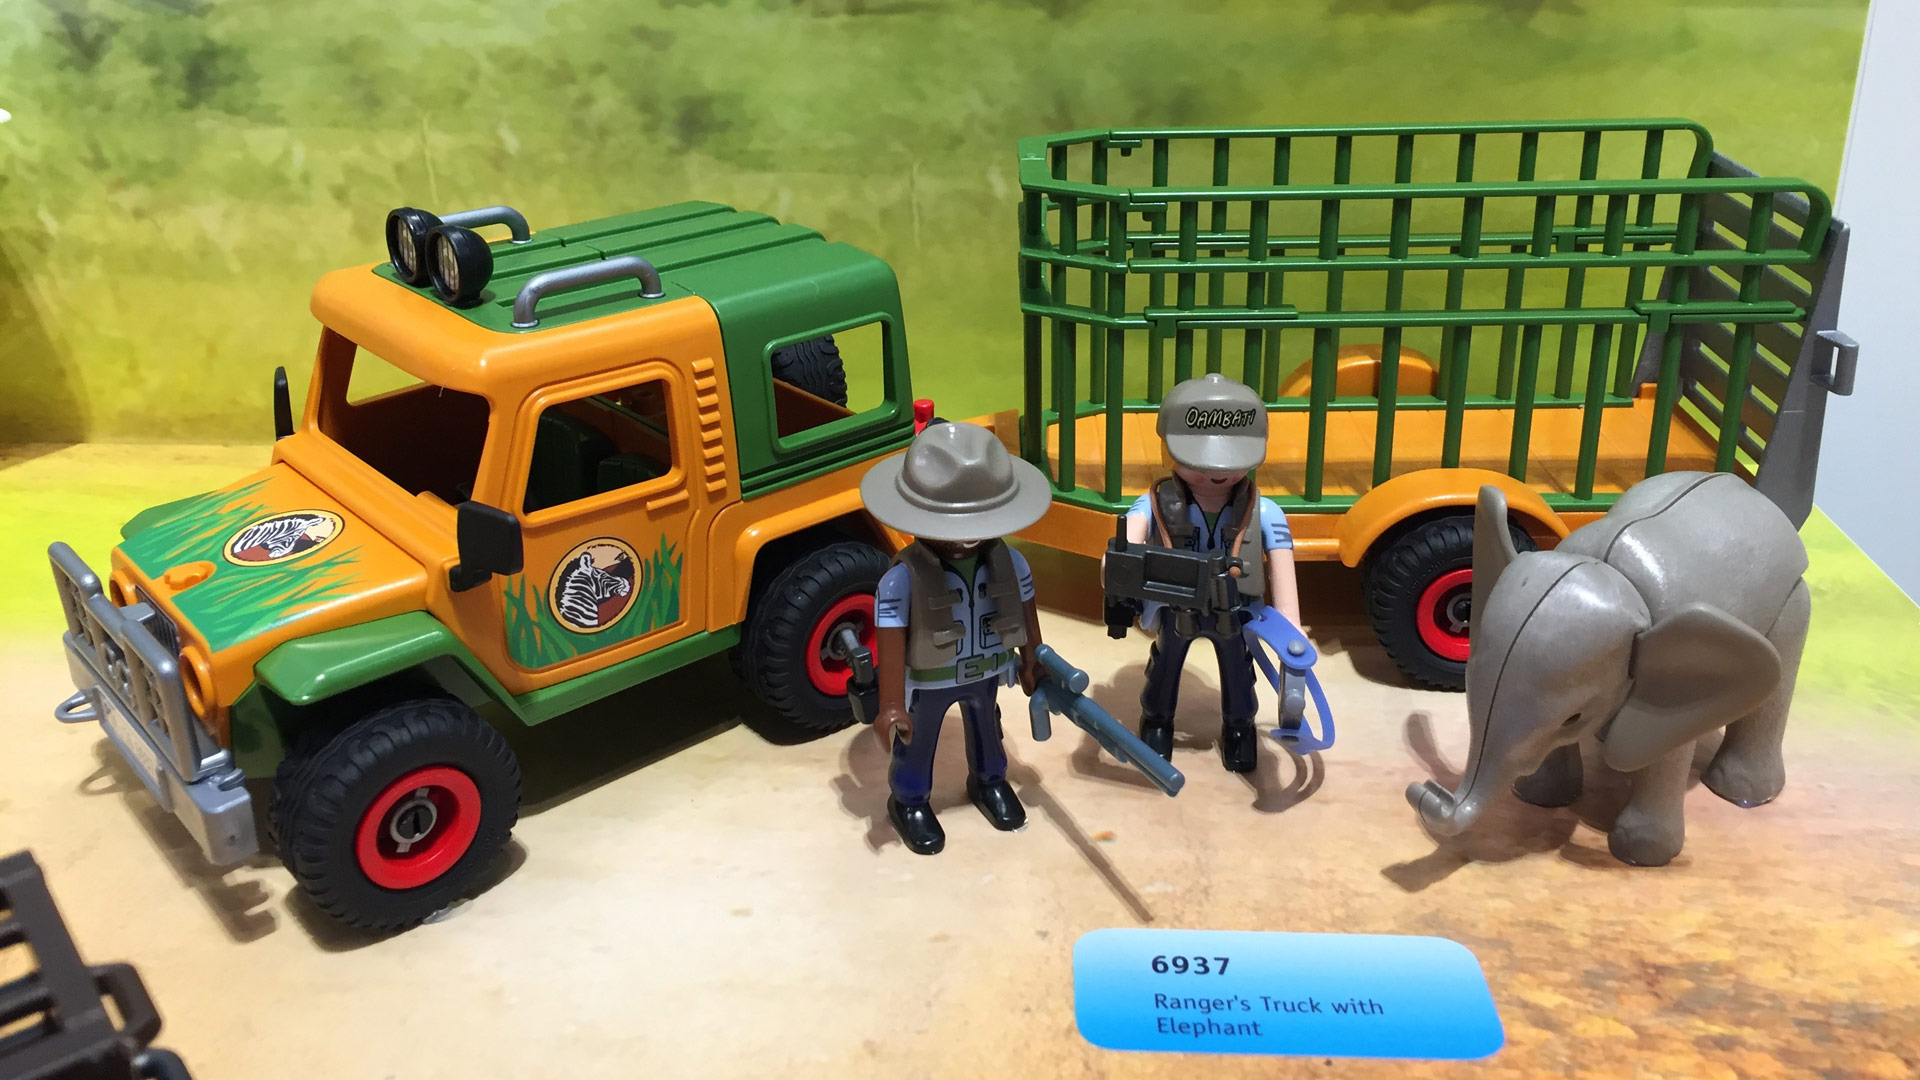 Playmobil Wildlife Set 6937 Ranger's Truck with Elephant at Toy Fair 2017